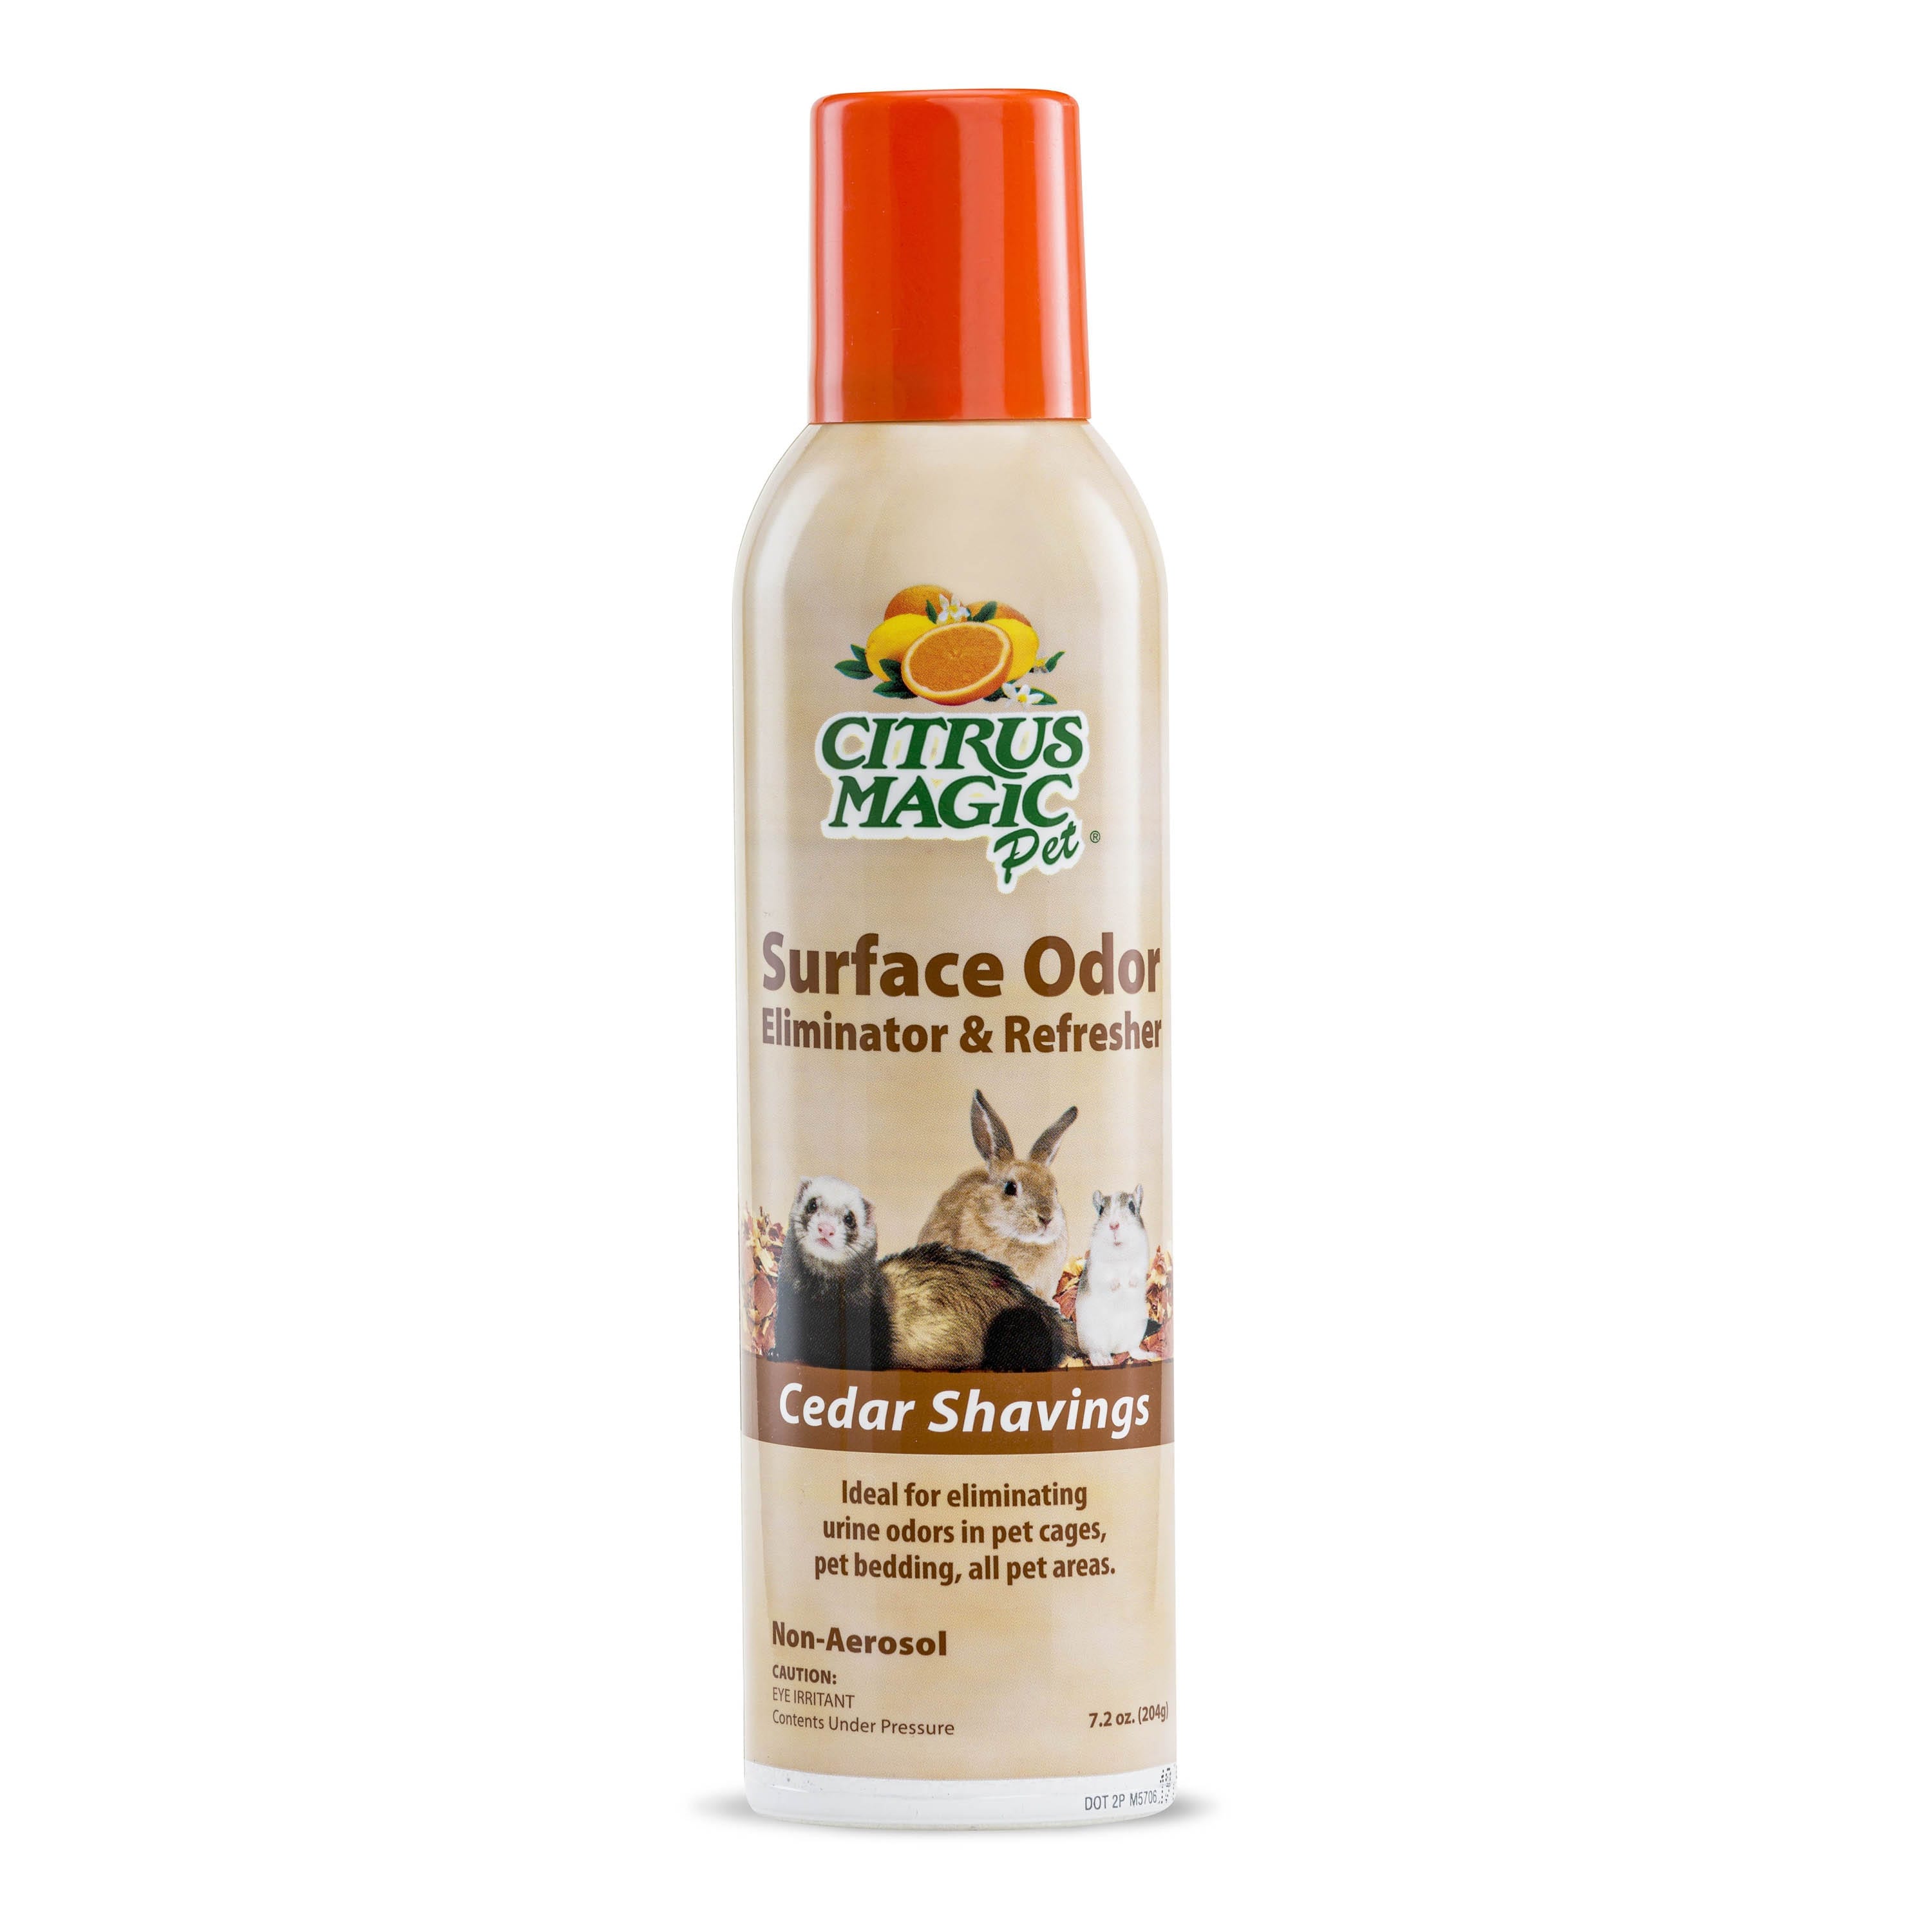 Citrus Magic Pet Surface Odor Eliminator and Refresher, Cedar Shavings